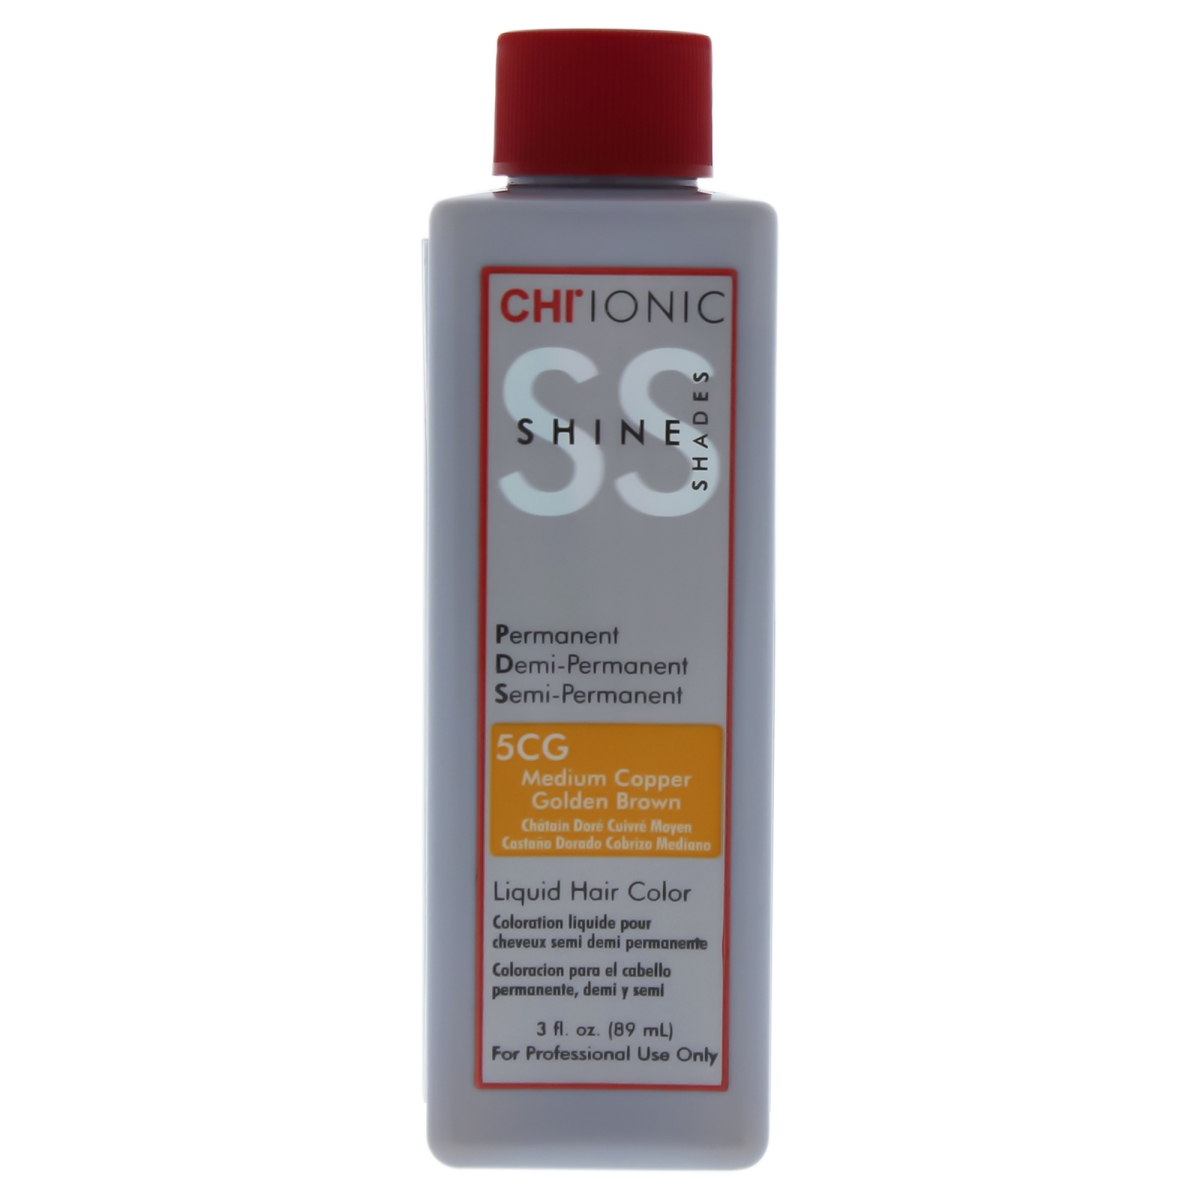 I0084026 Ionic Shine Shades Liquid Hair Color For Unisex - 5cg Medium Copper Golden Brown - 3 Oz